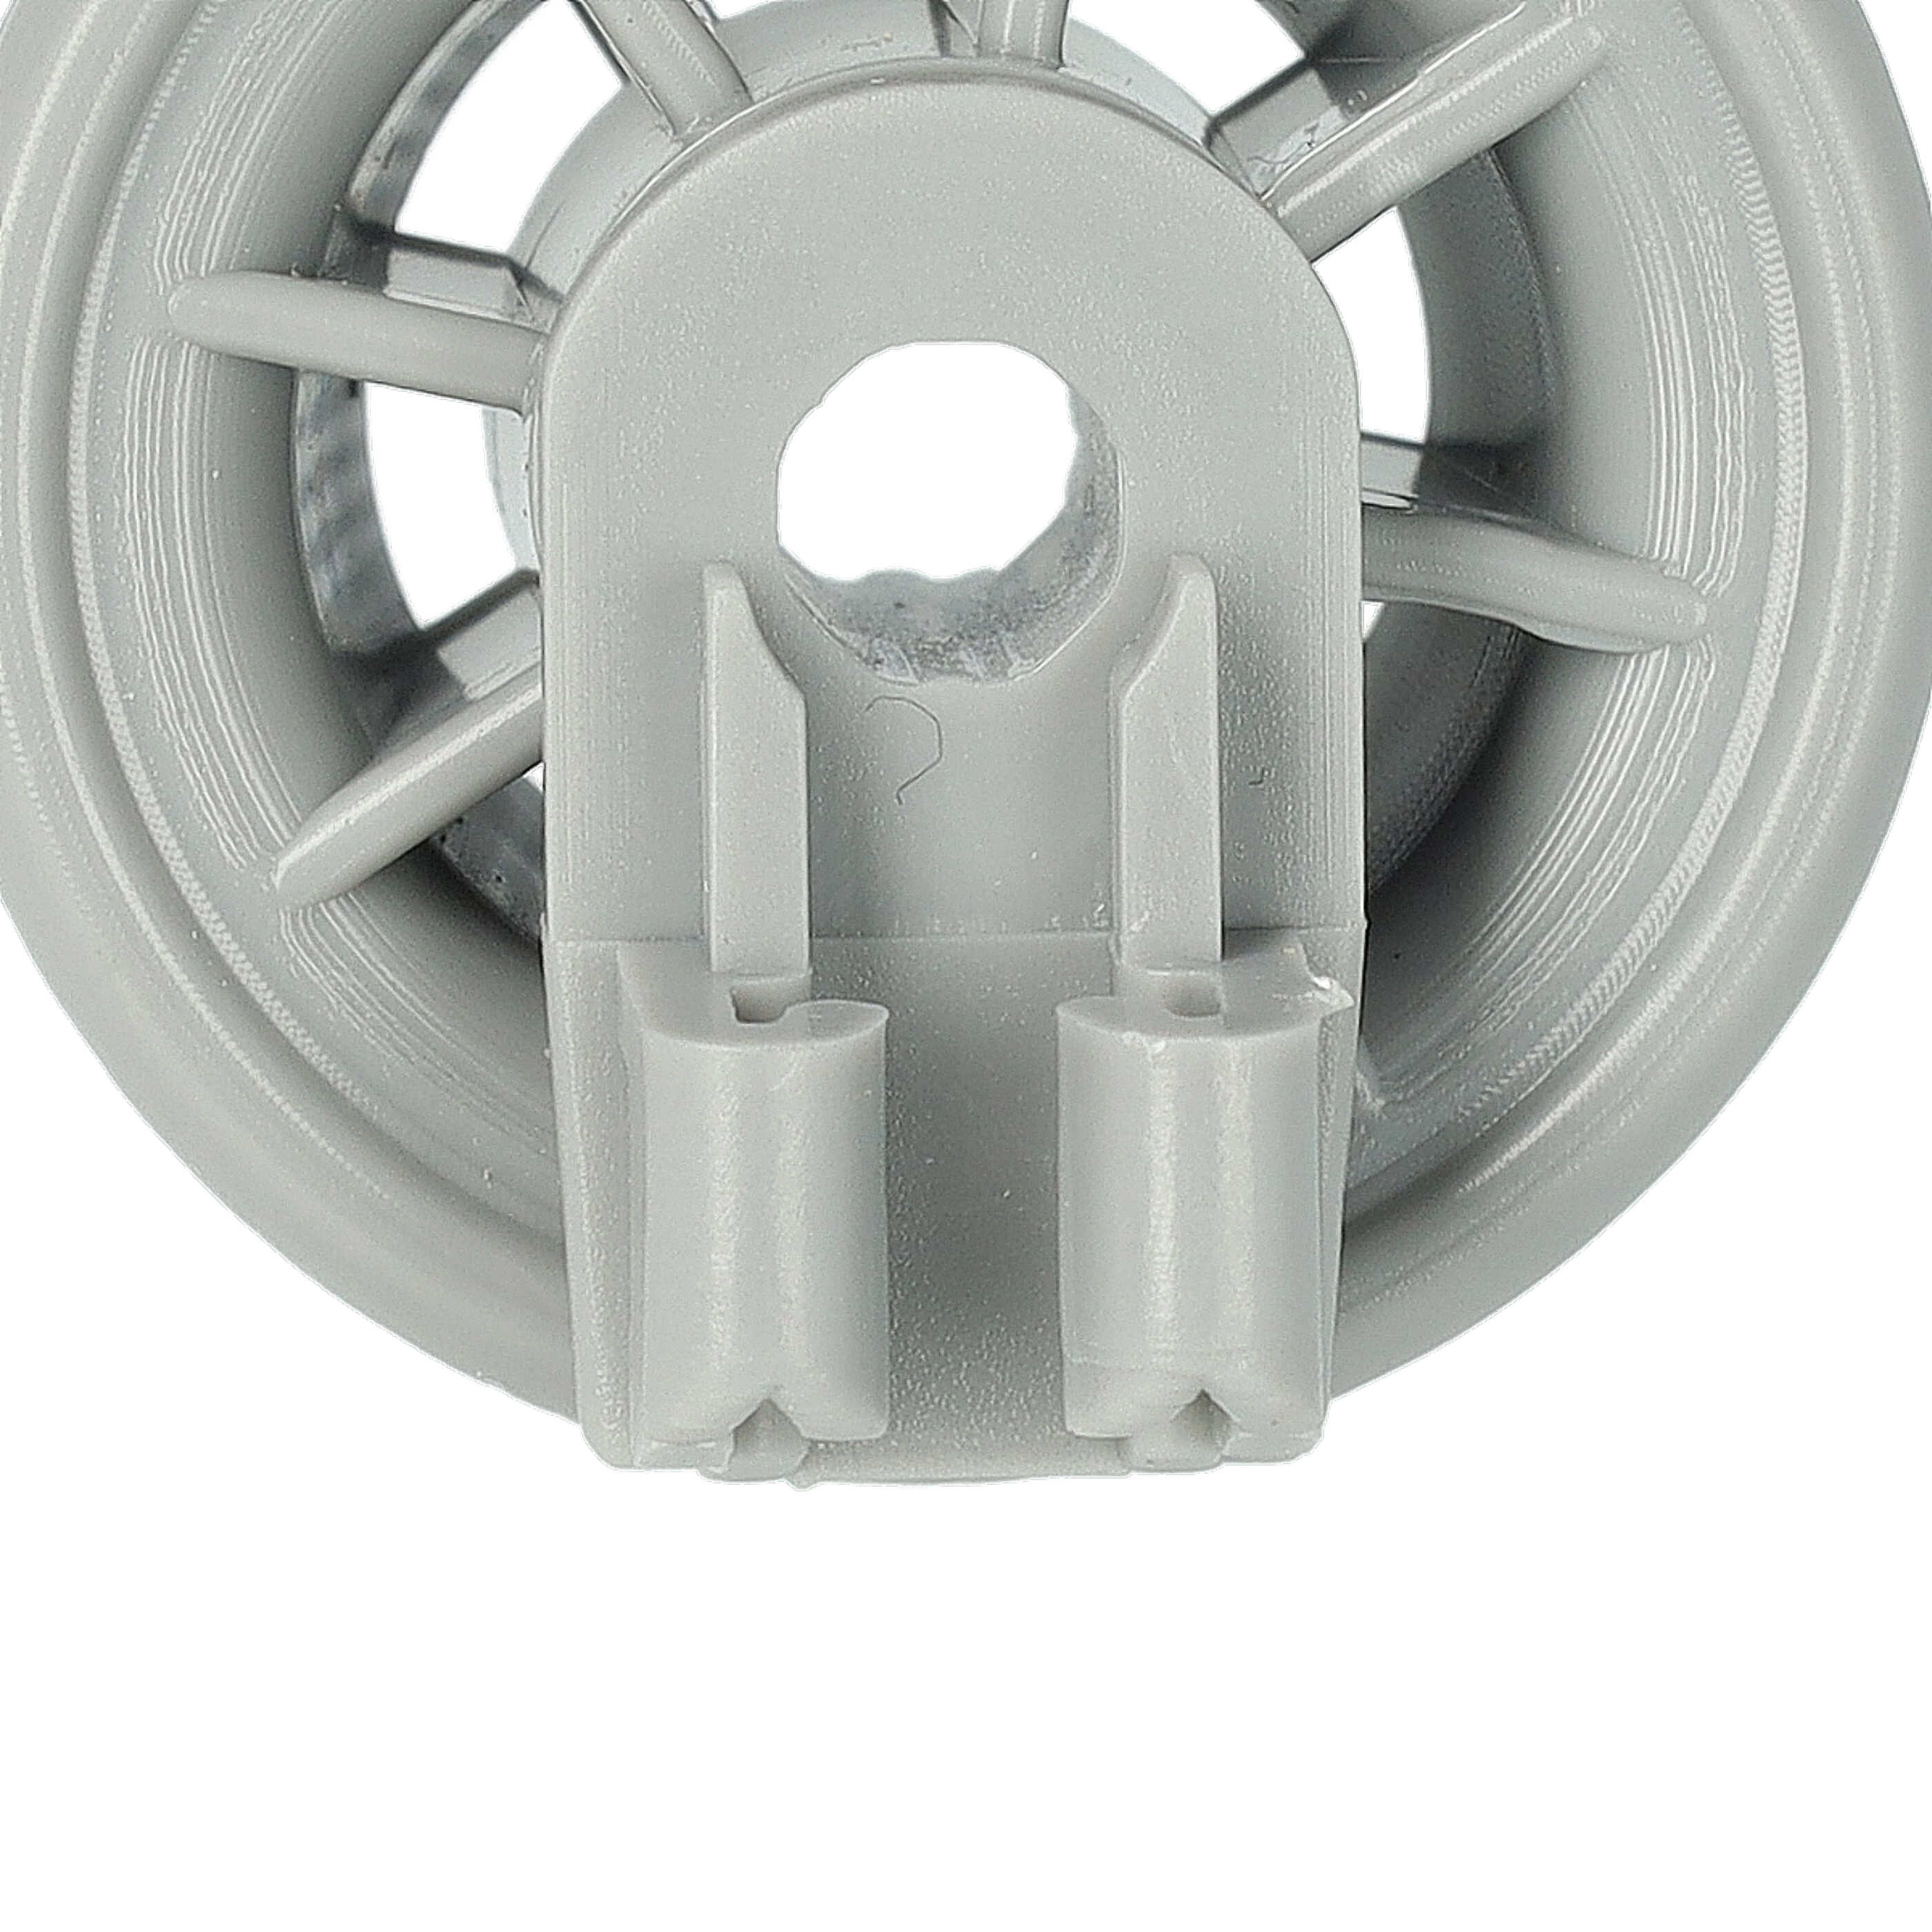 8x Lower Basket Wheel Diameter 35 mm replaces Bosch 00170838, 00183955, 00170834 for Hanseatic Dishwasher